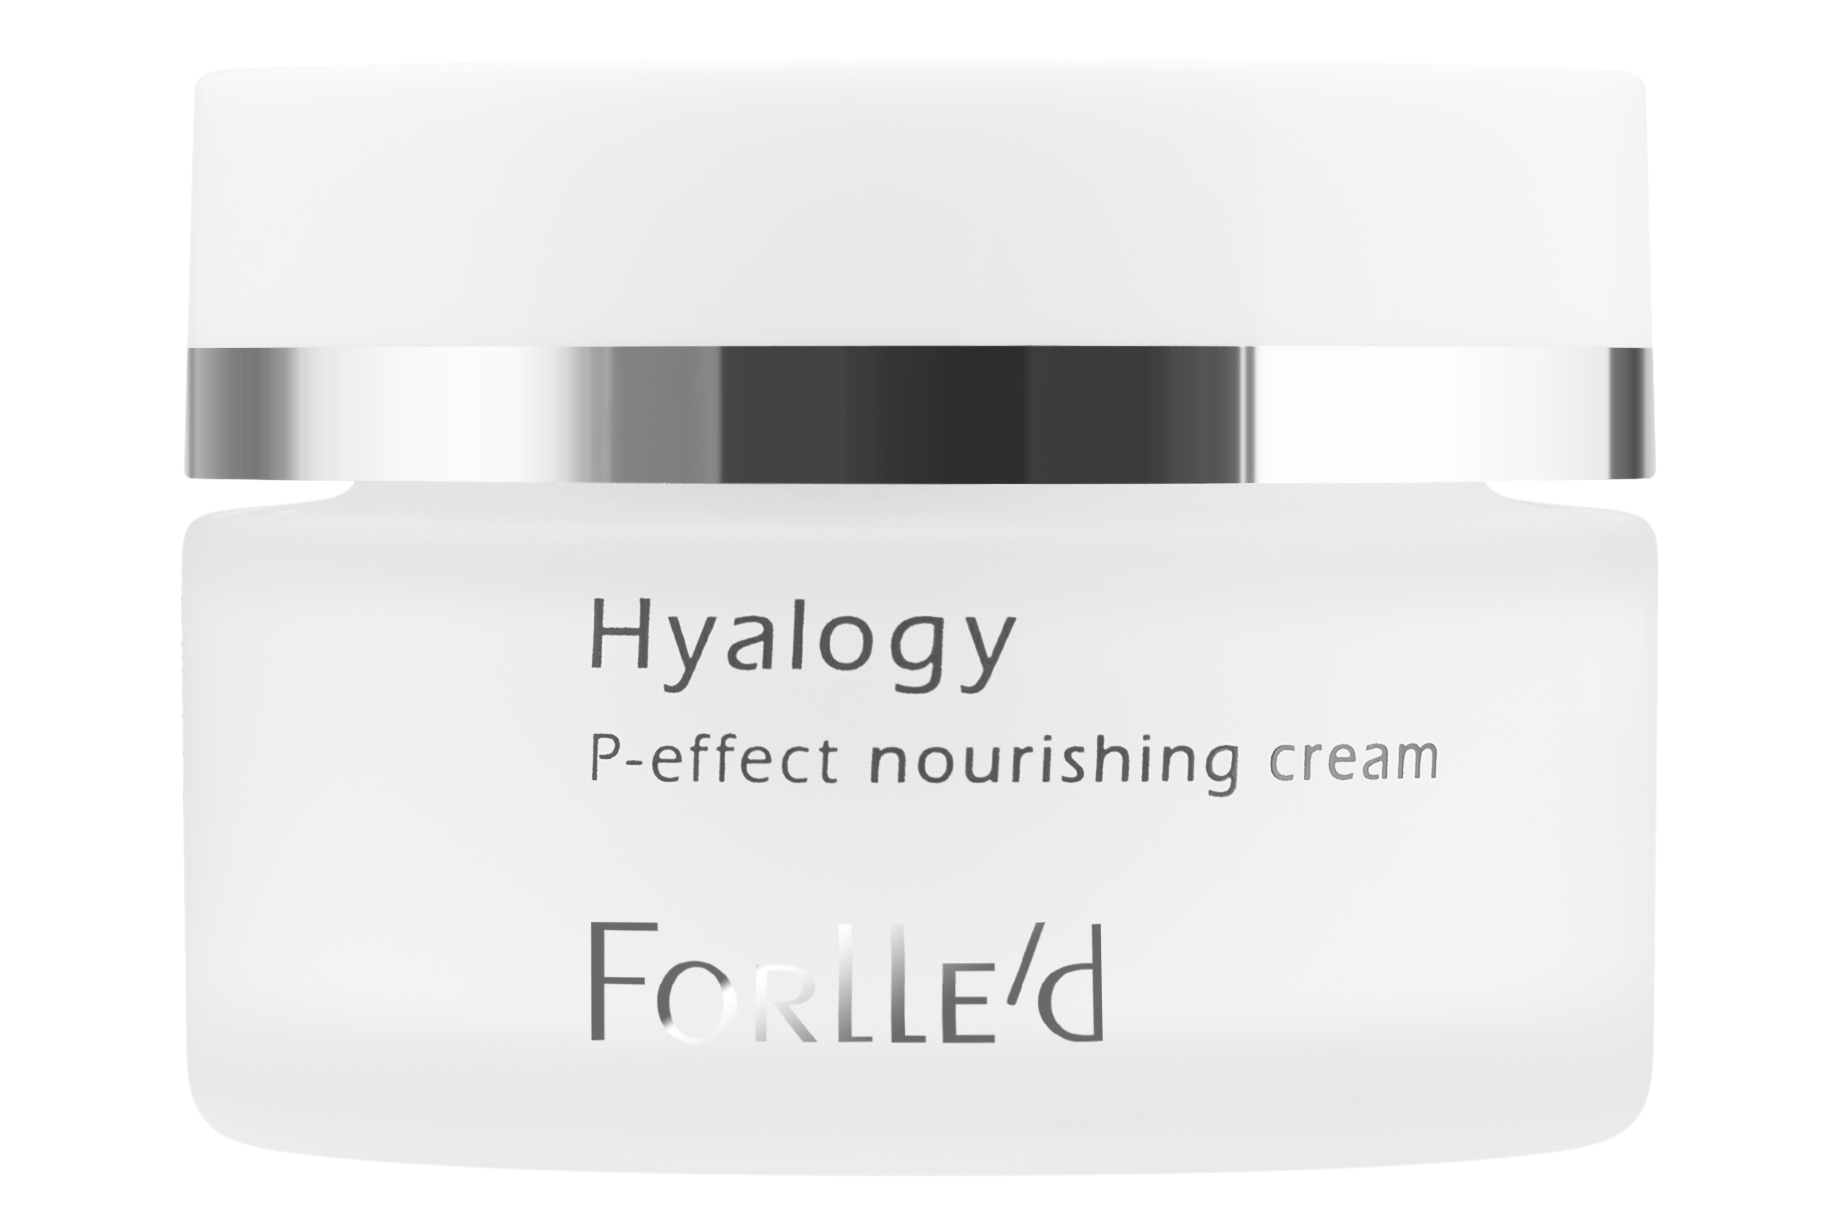 Hyalogy P-effect nourishing cream DOM